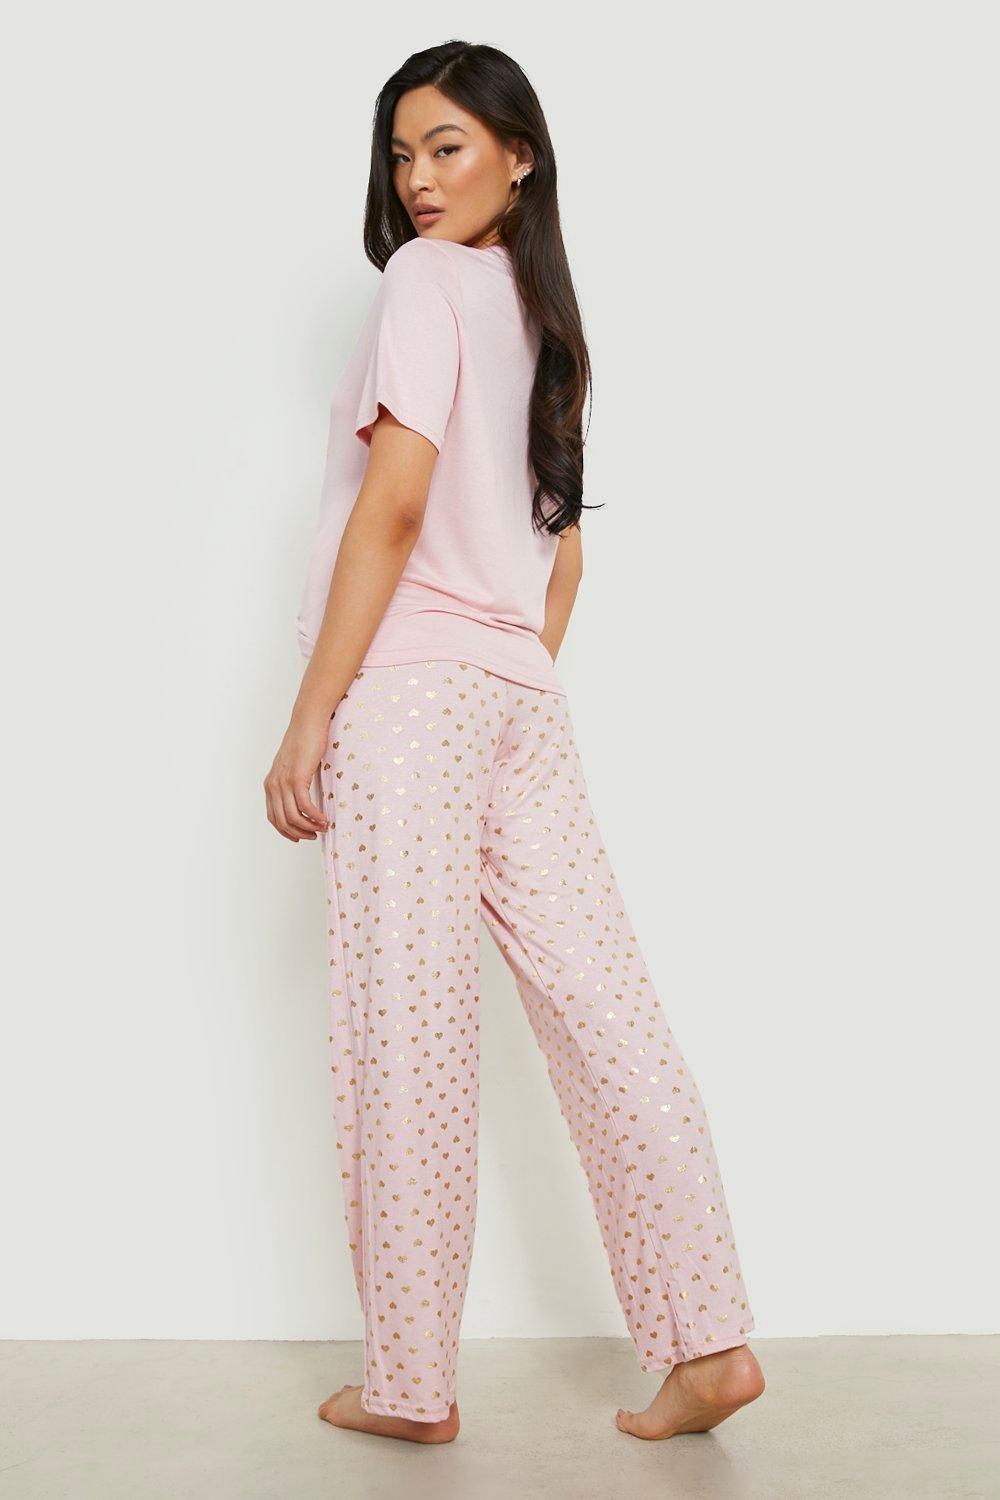 Womens Clothing Nightwear and sleepwear Pyjamas Boohoo Bride To Be Heart Print Short Pj Set in Blush Pink 